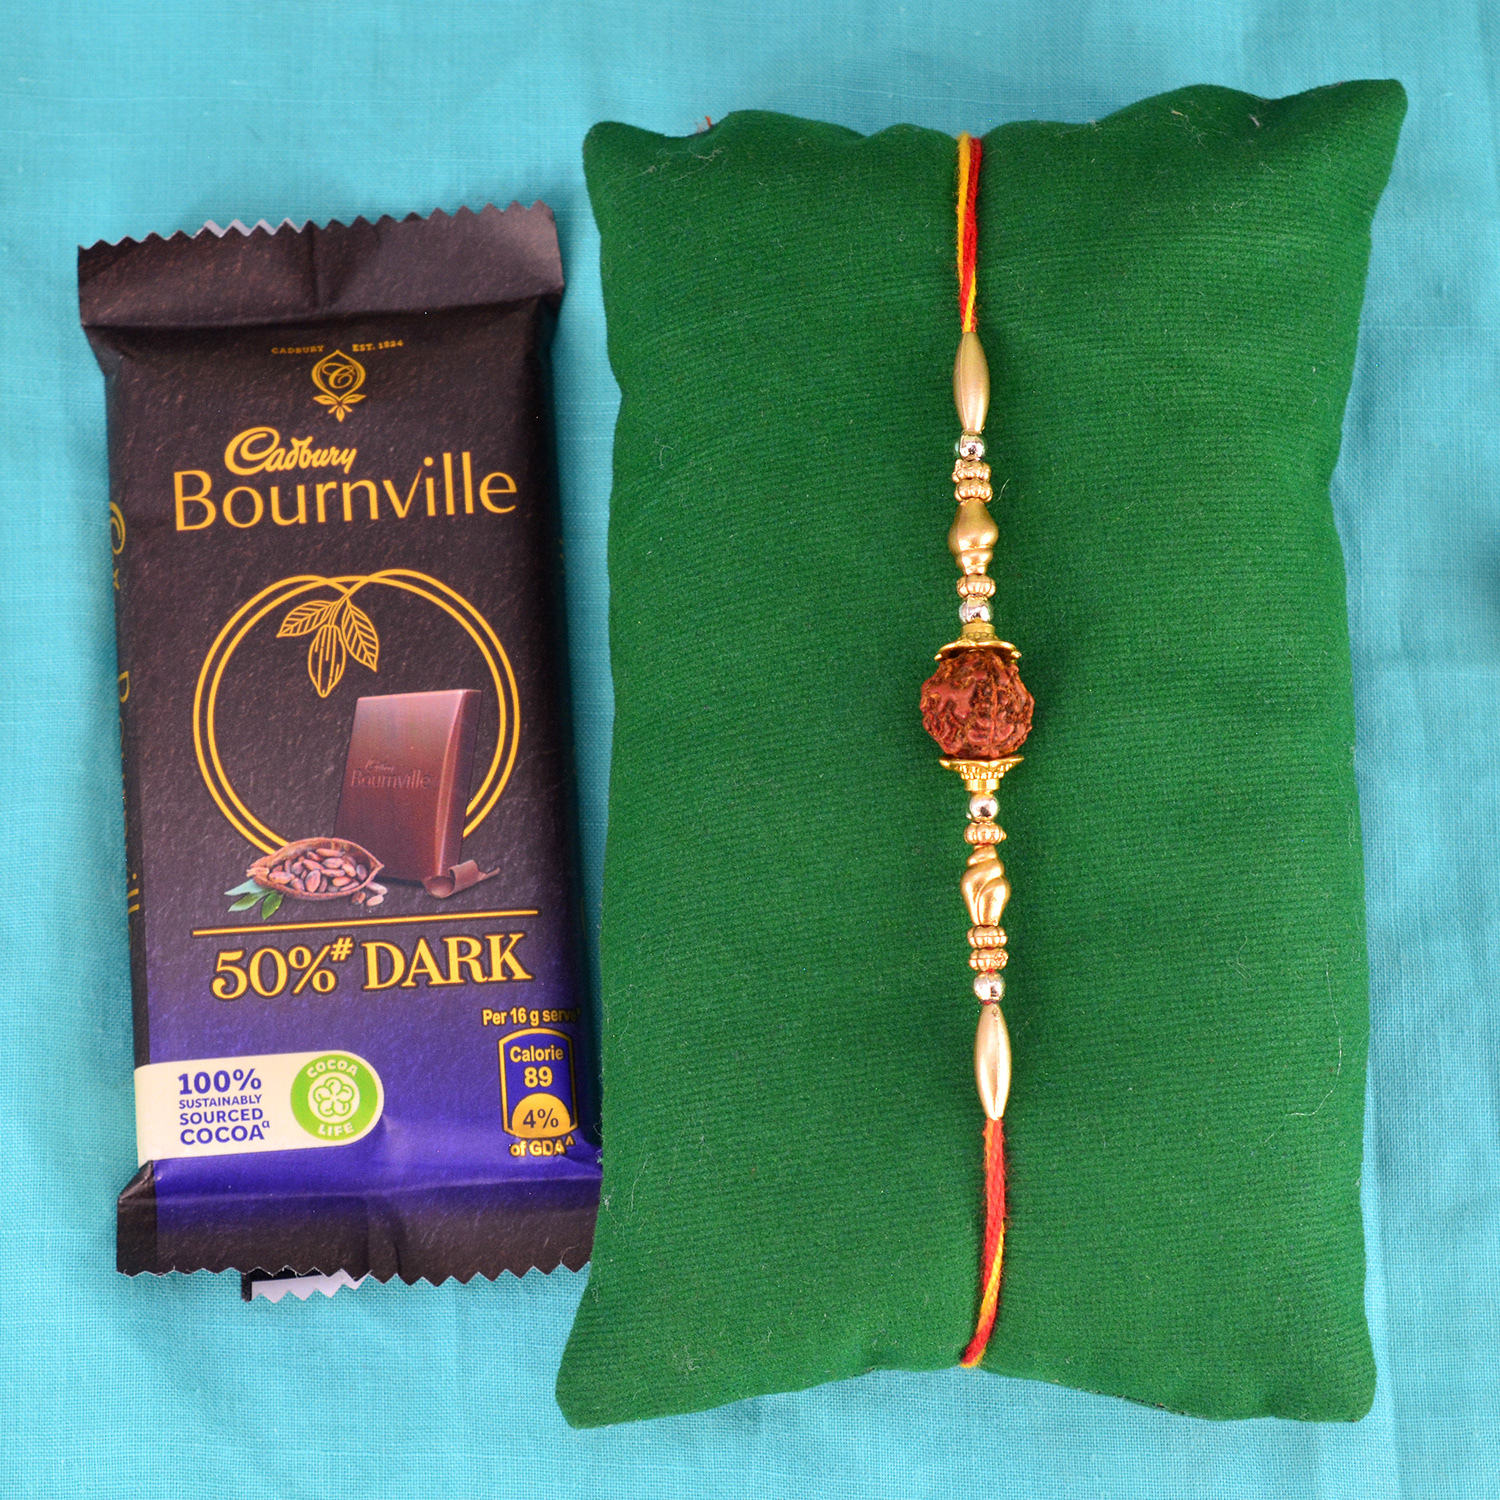 Cadbury Small Bournville Chocolate with Rudraksh Brother Rakhi